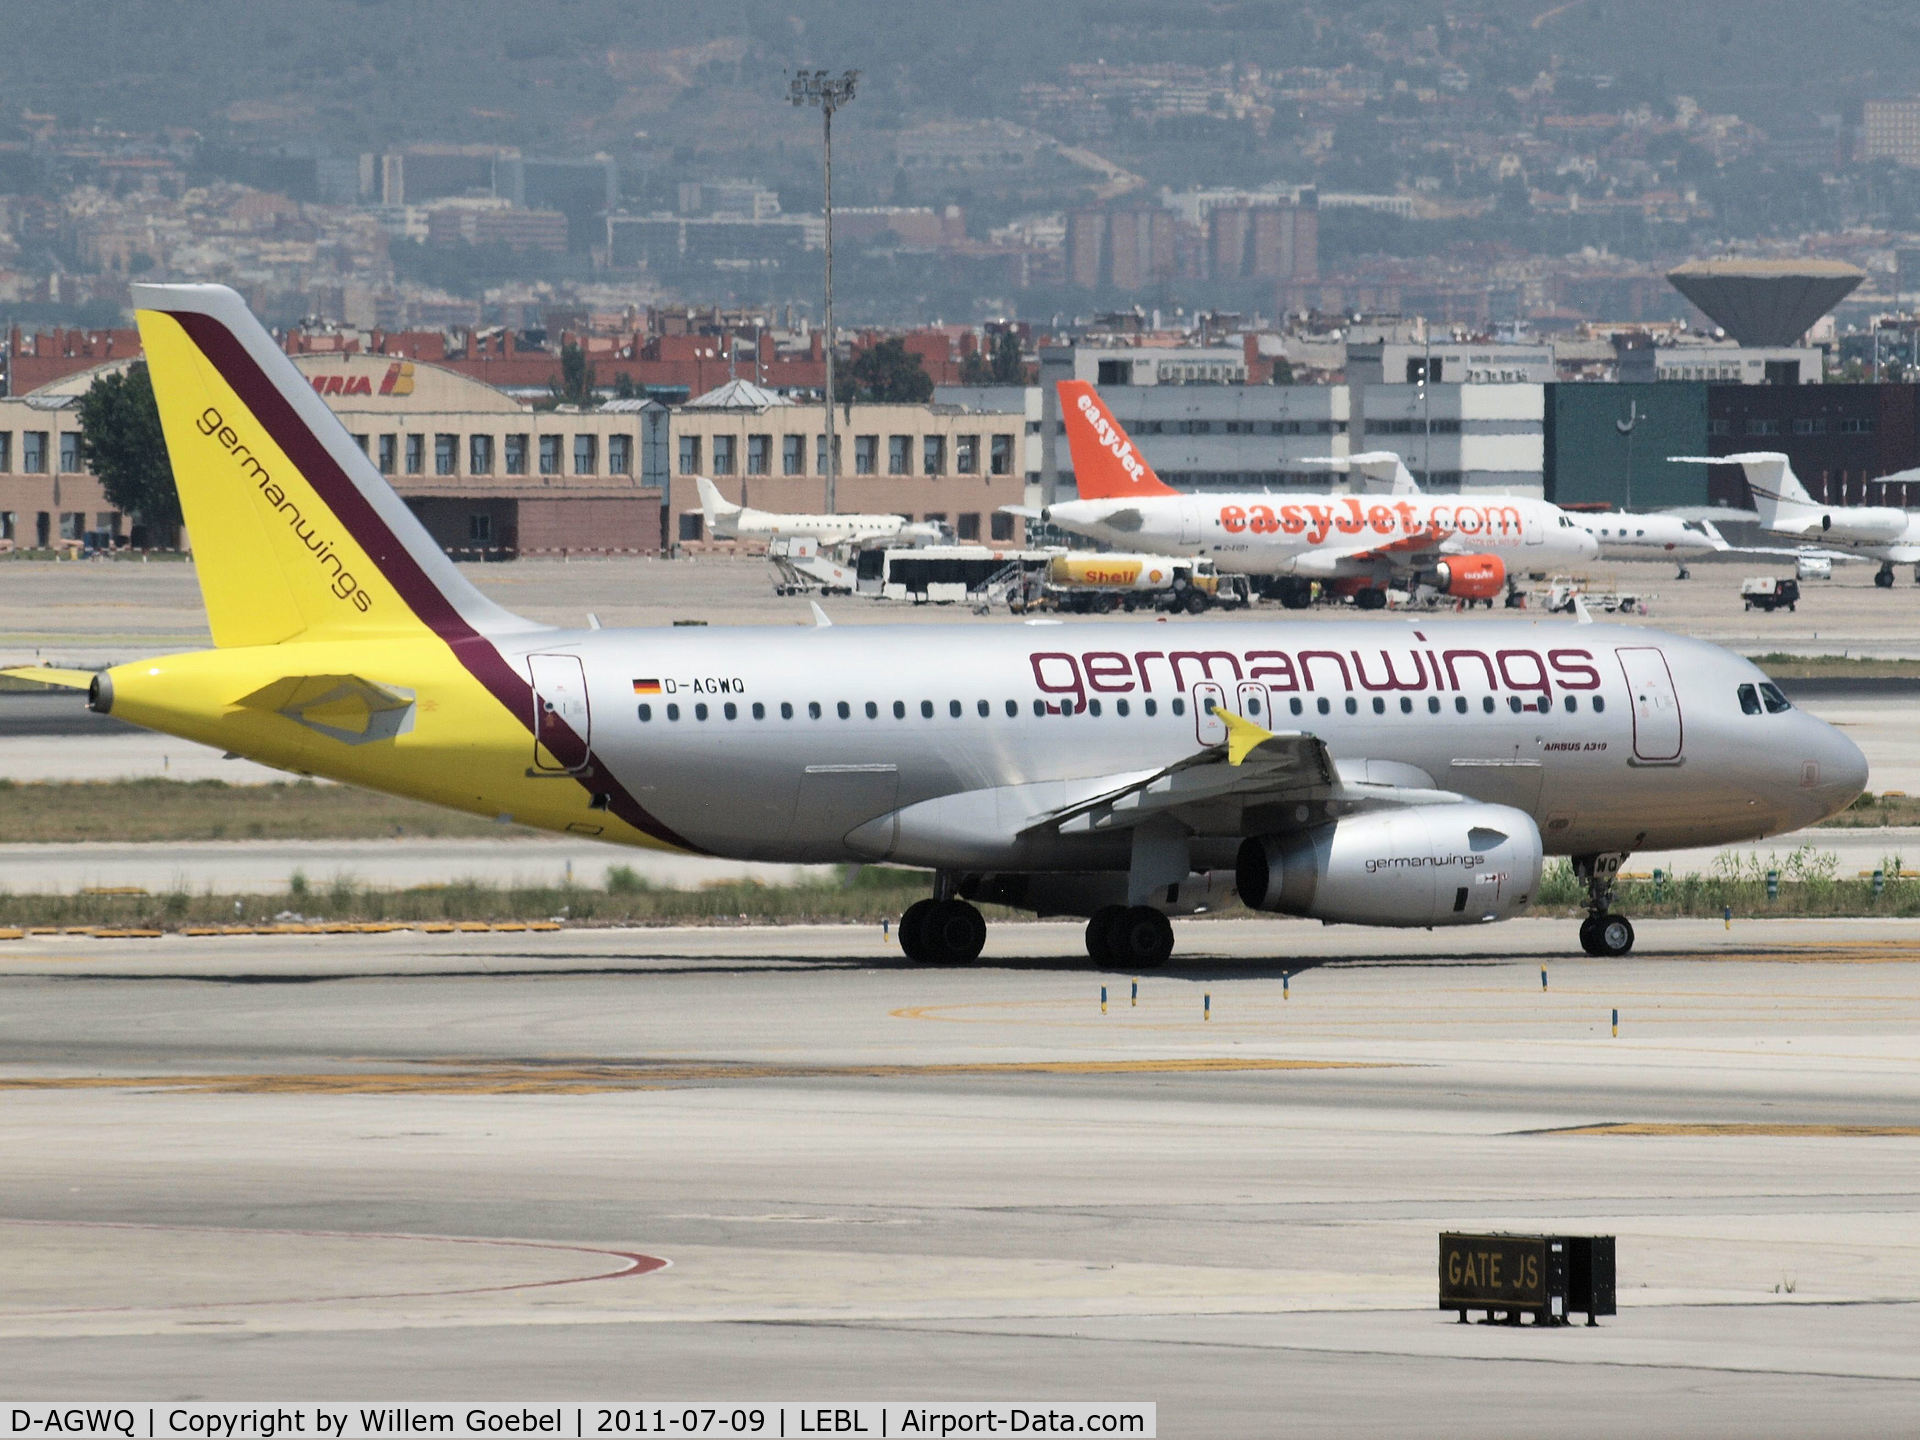 D-AGWQ, 2010 Airbus A319-132 C/N 4256, Depart from Barcelona Airport